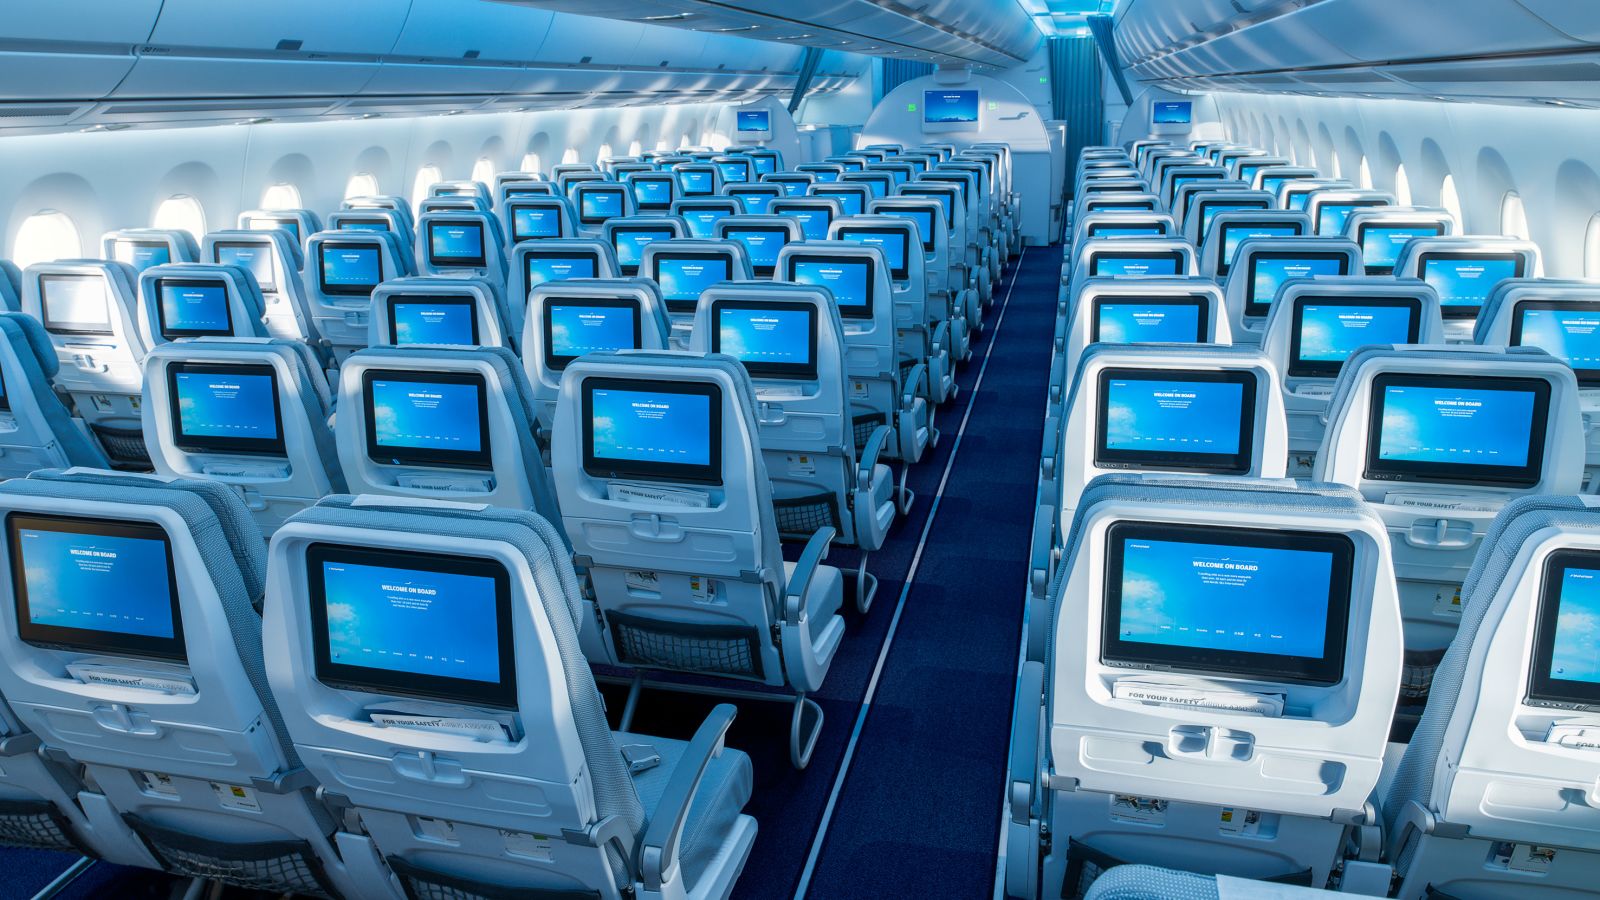 Finnair seats with screens